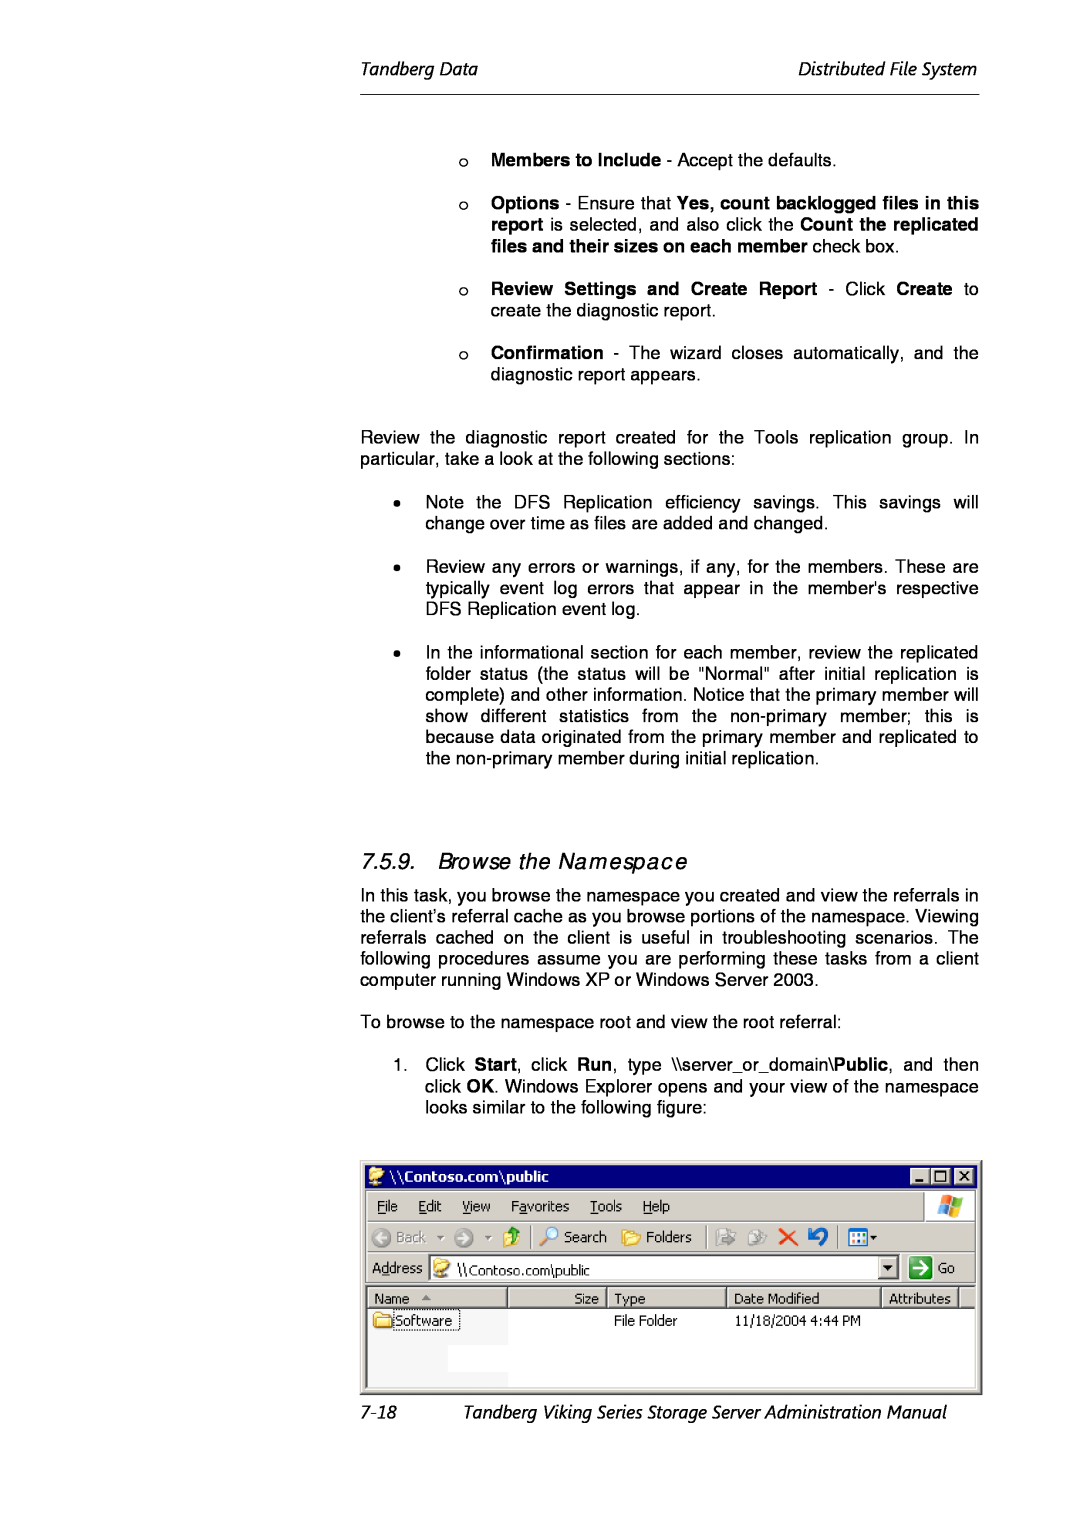 Tandberg Data Viking FS-1600, Viking FS-1500 manual Browse the Namespace, Tandberg DataDistributed File System, 7-18 